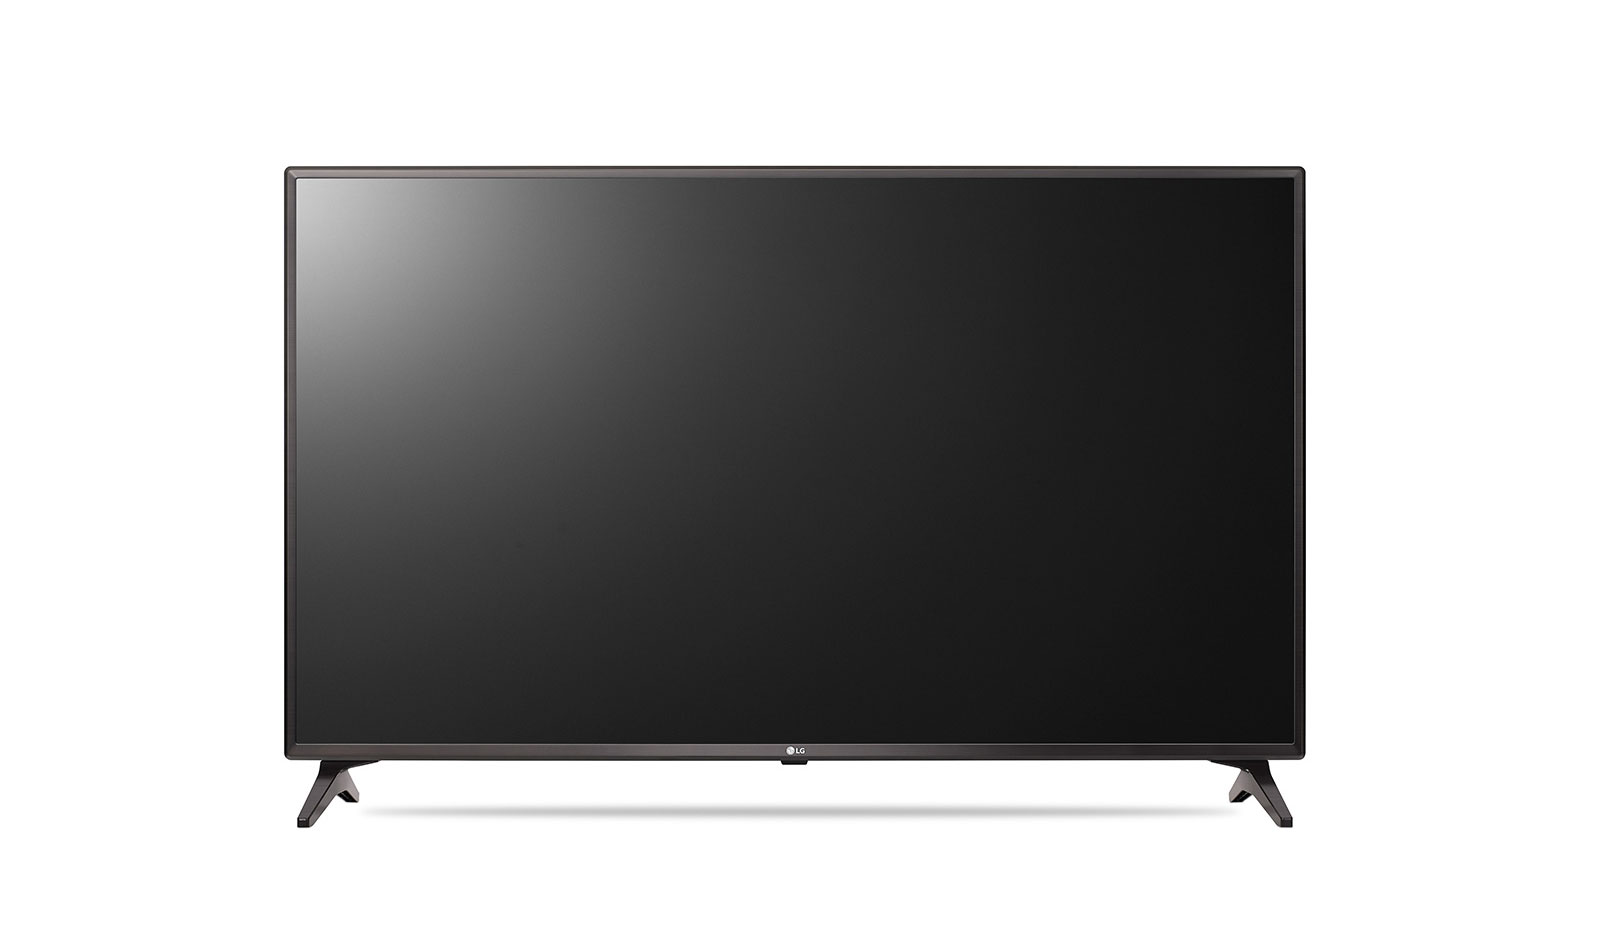 LG TV FULL HD TV - 43 Inch screen 43LJ614T